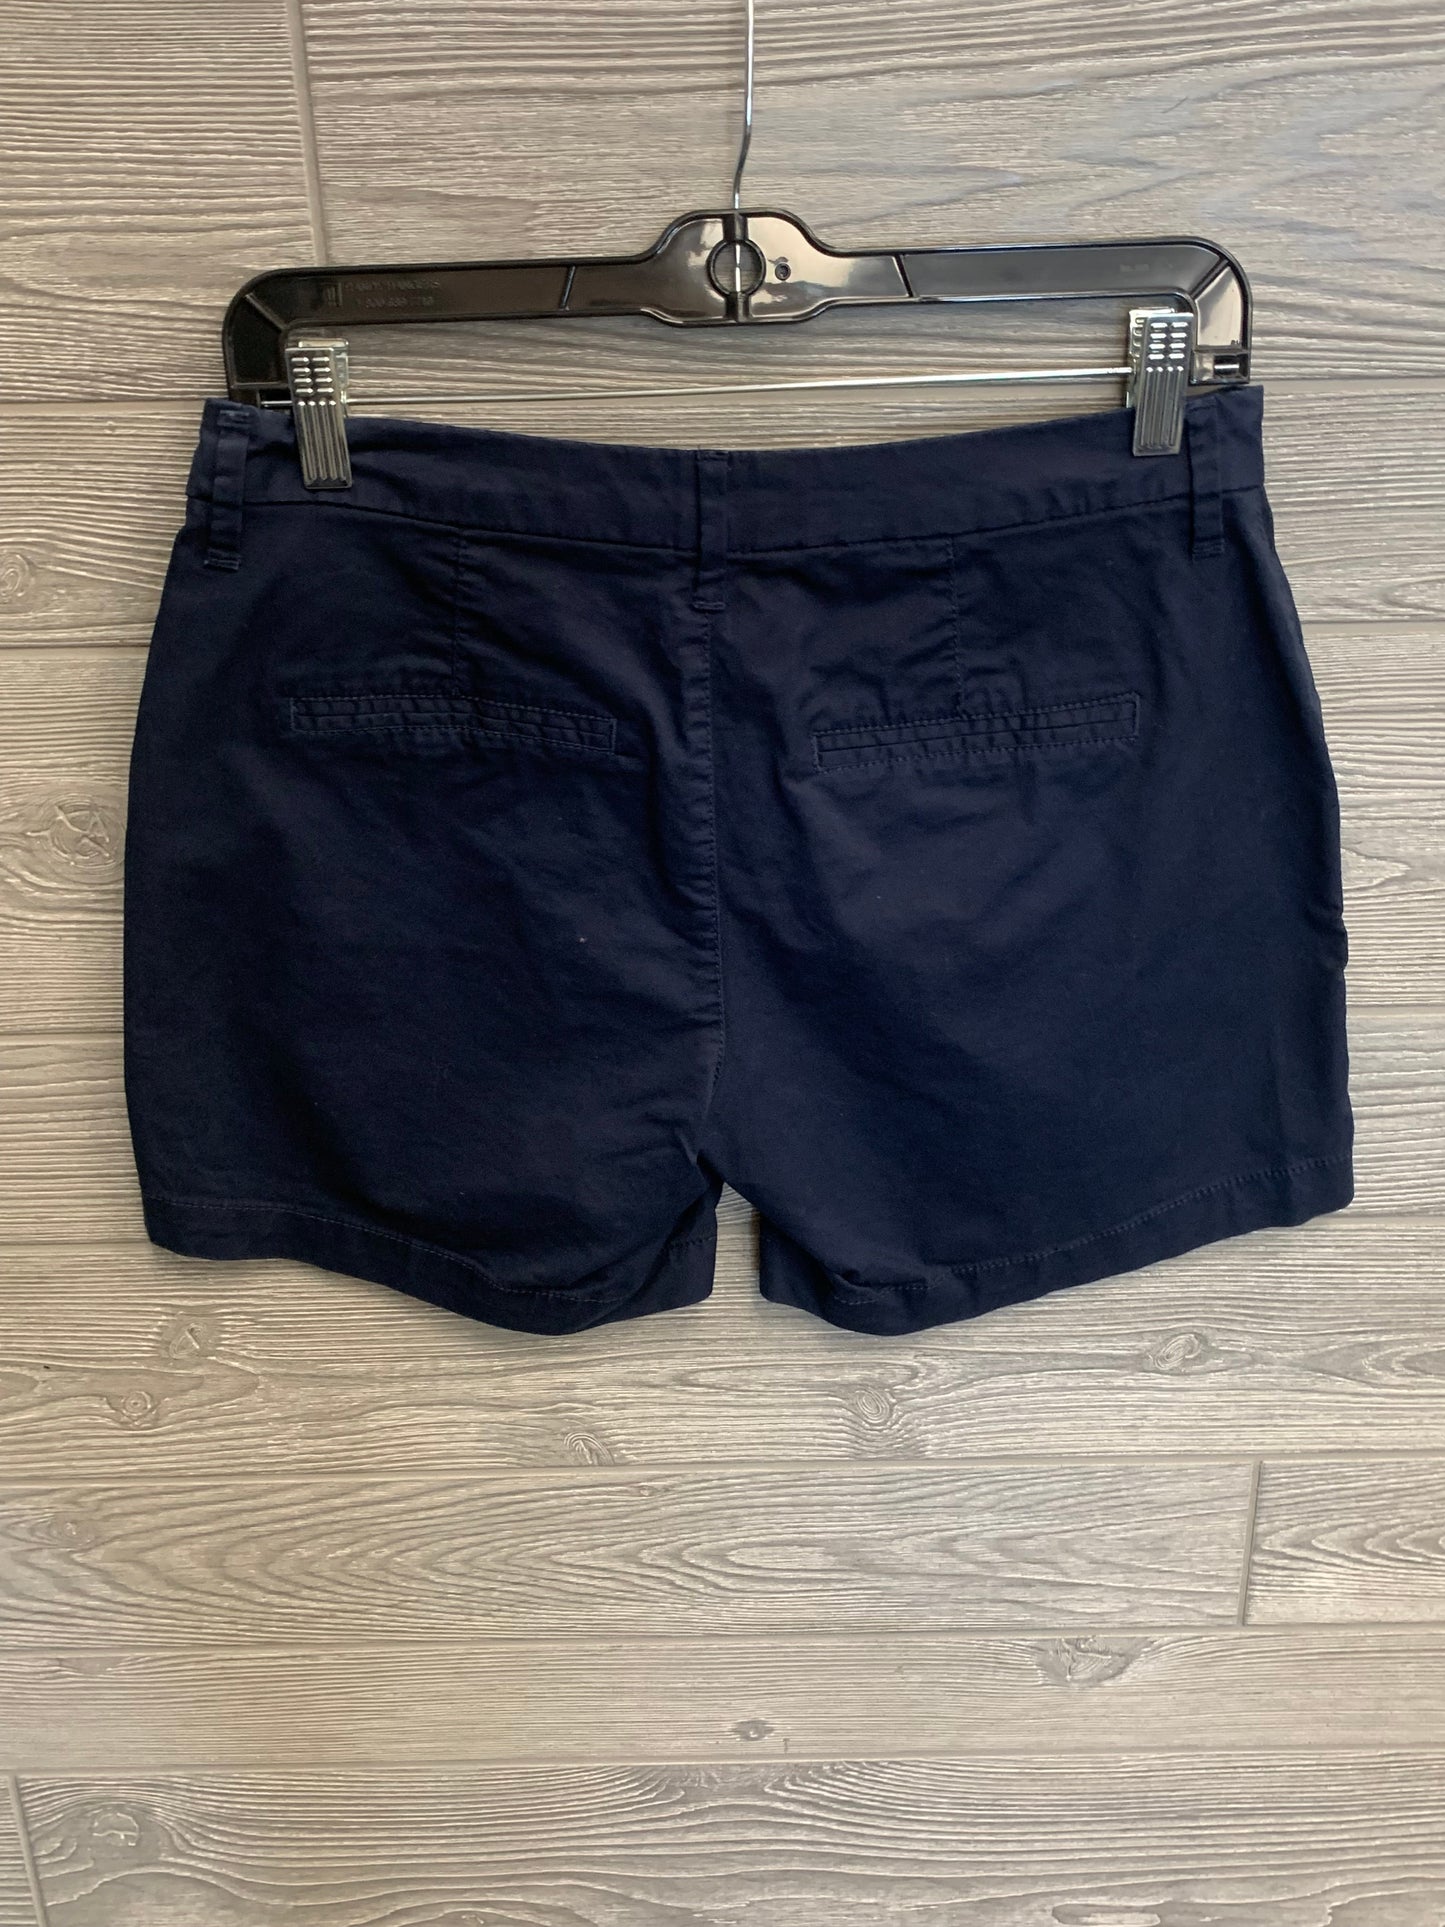 Blue Shorts Old Navy, Size 2